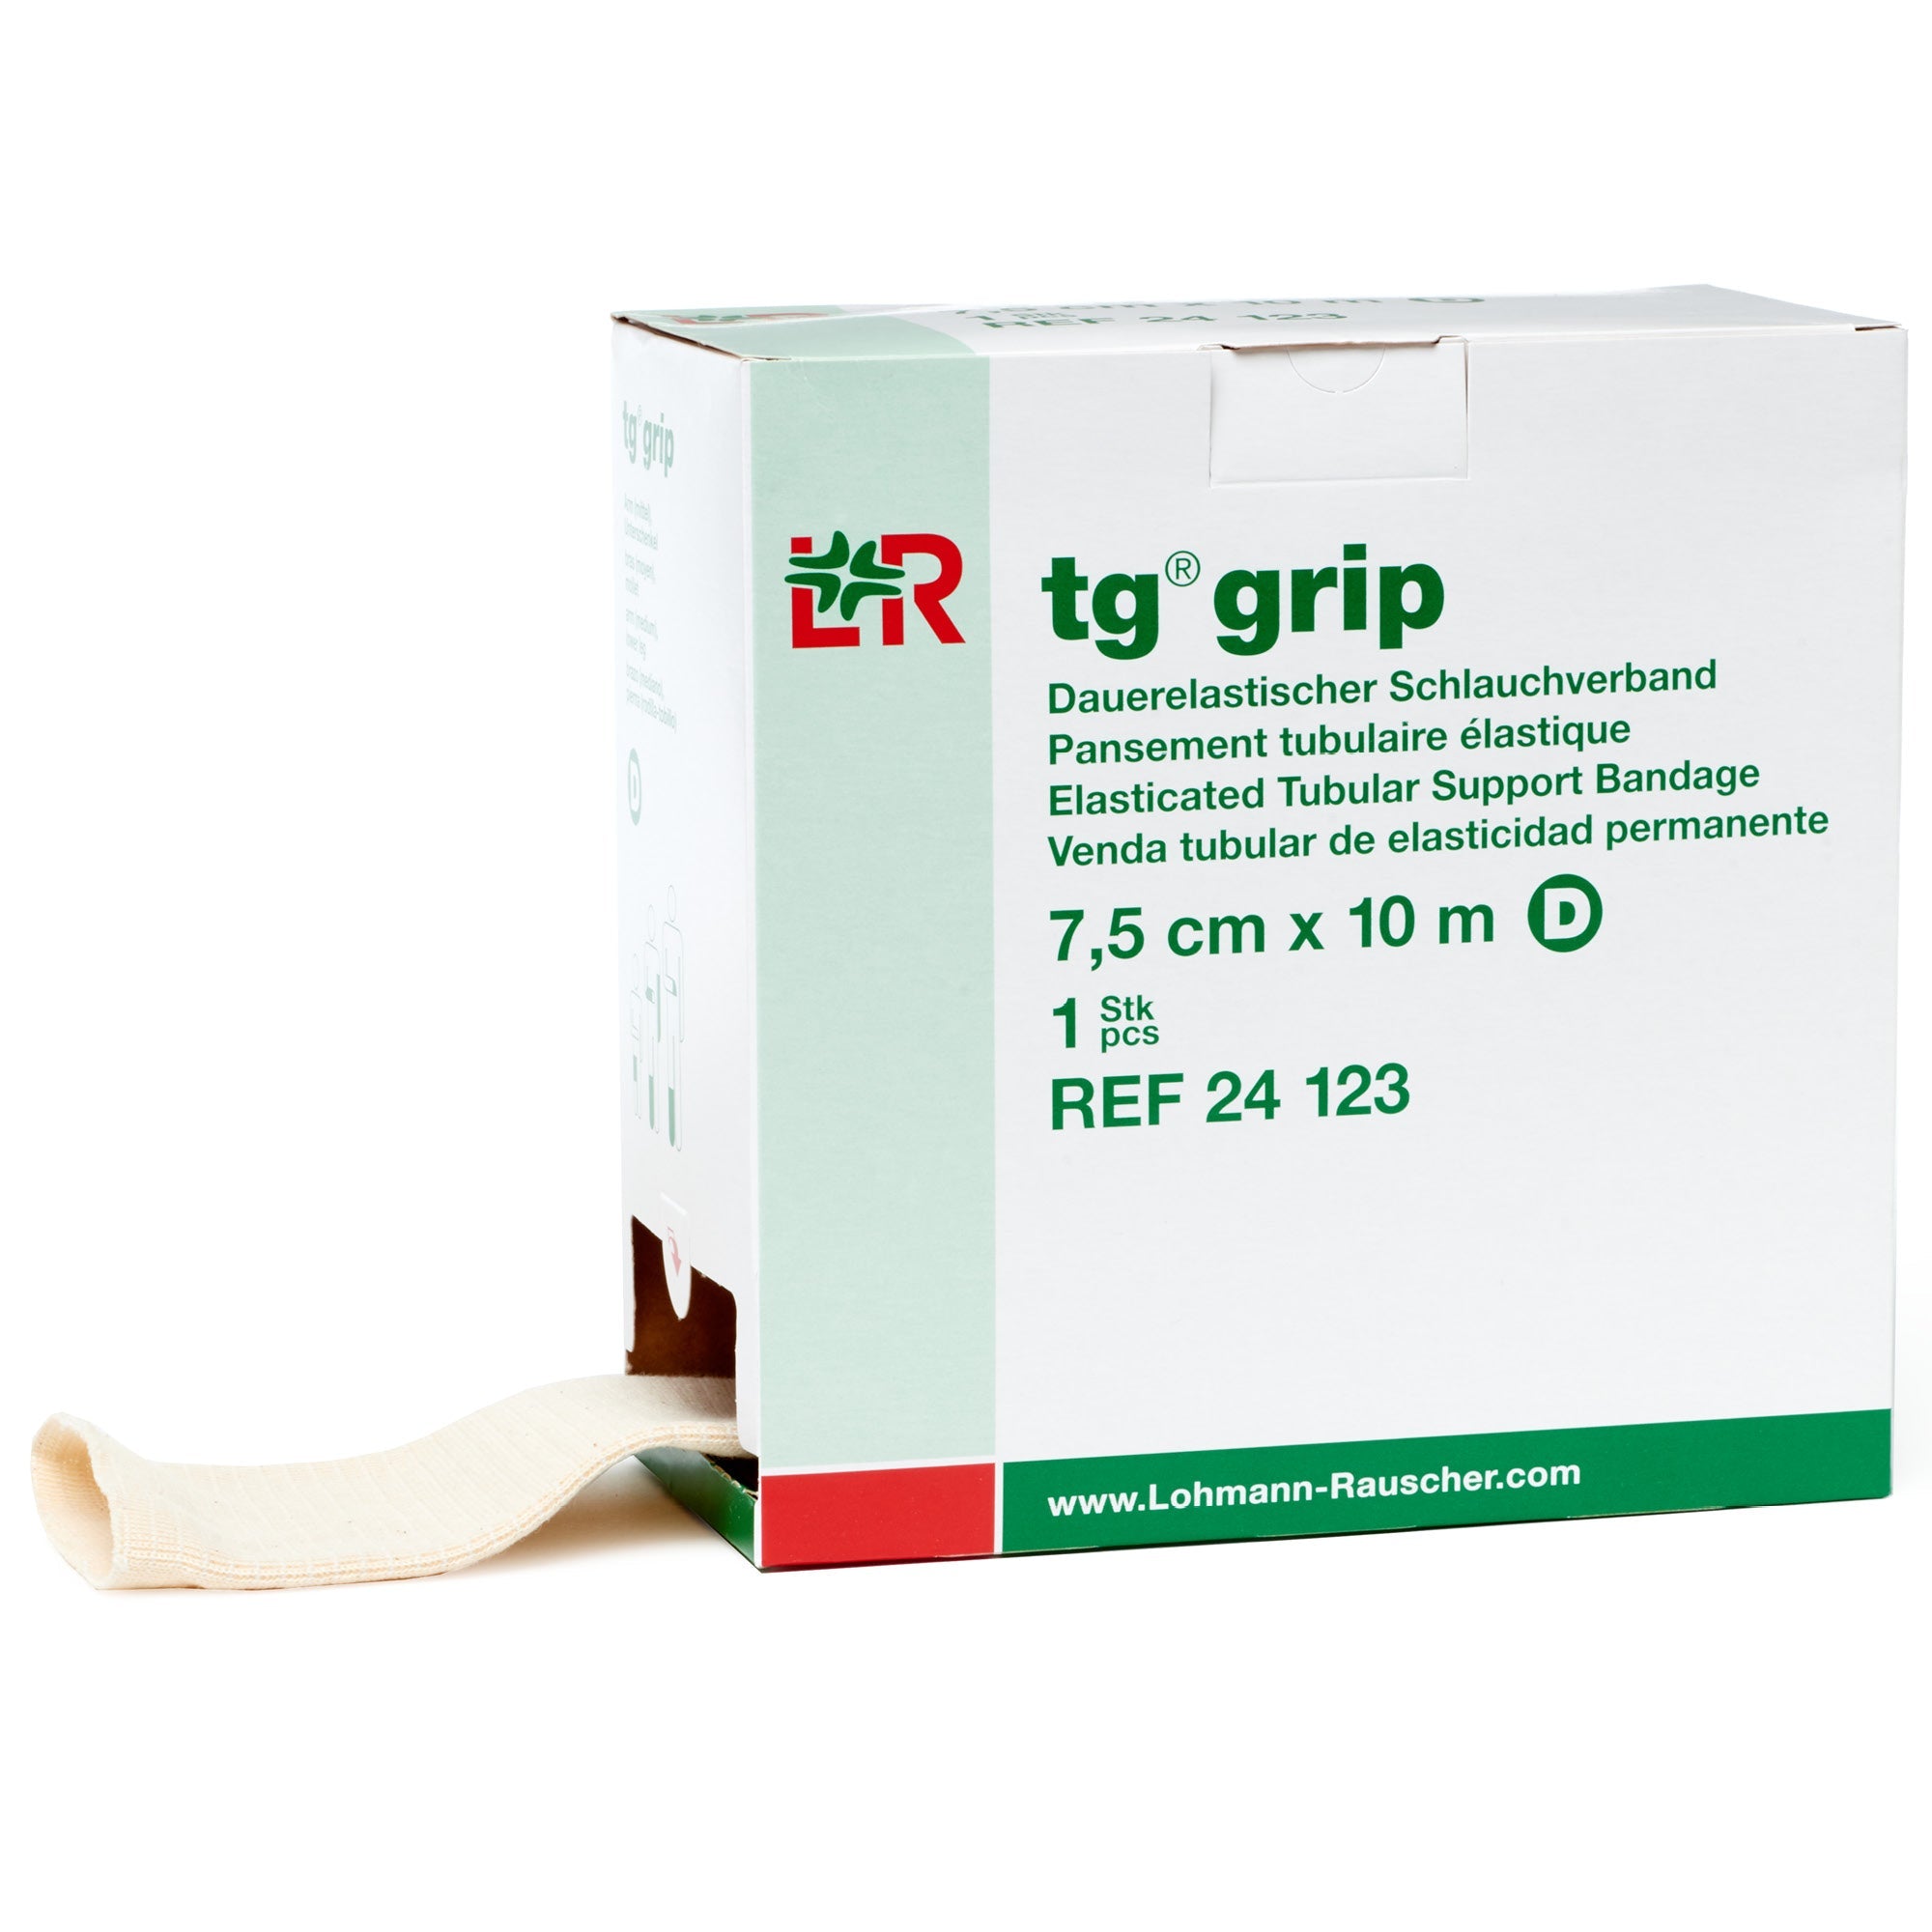 L&R tg® Grip Elasticized Tubular Support Bandage, D